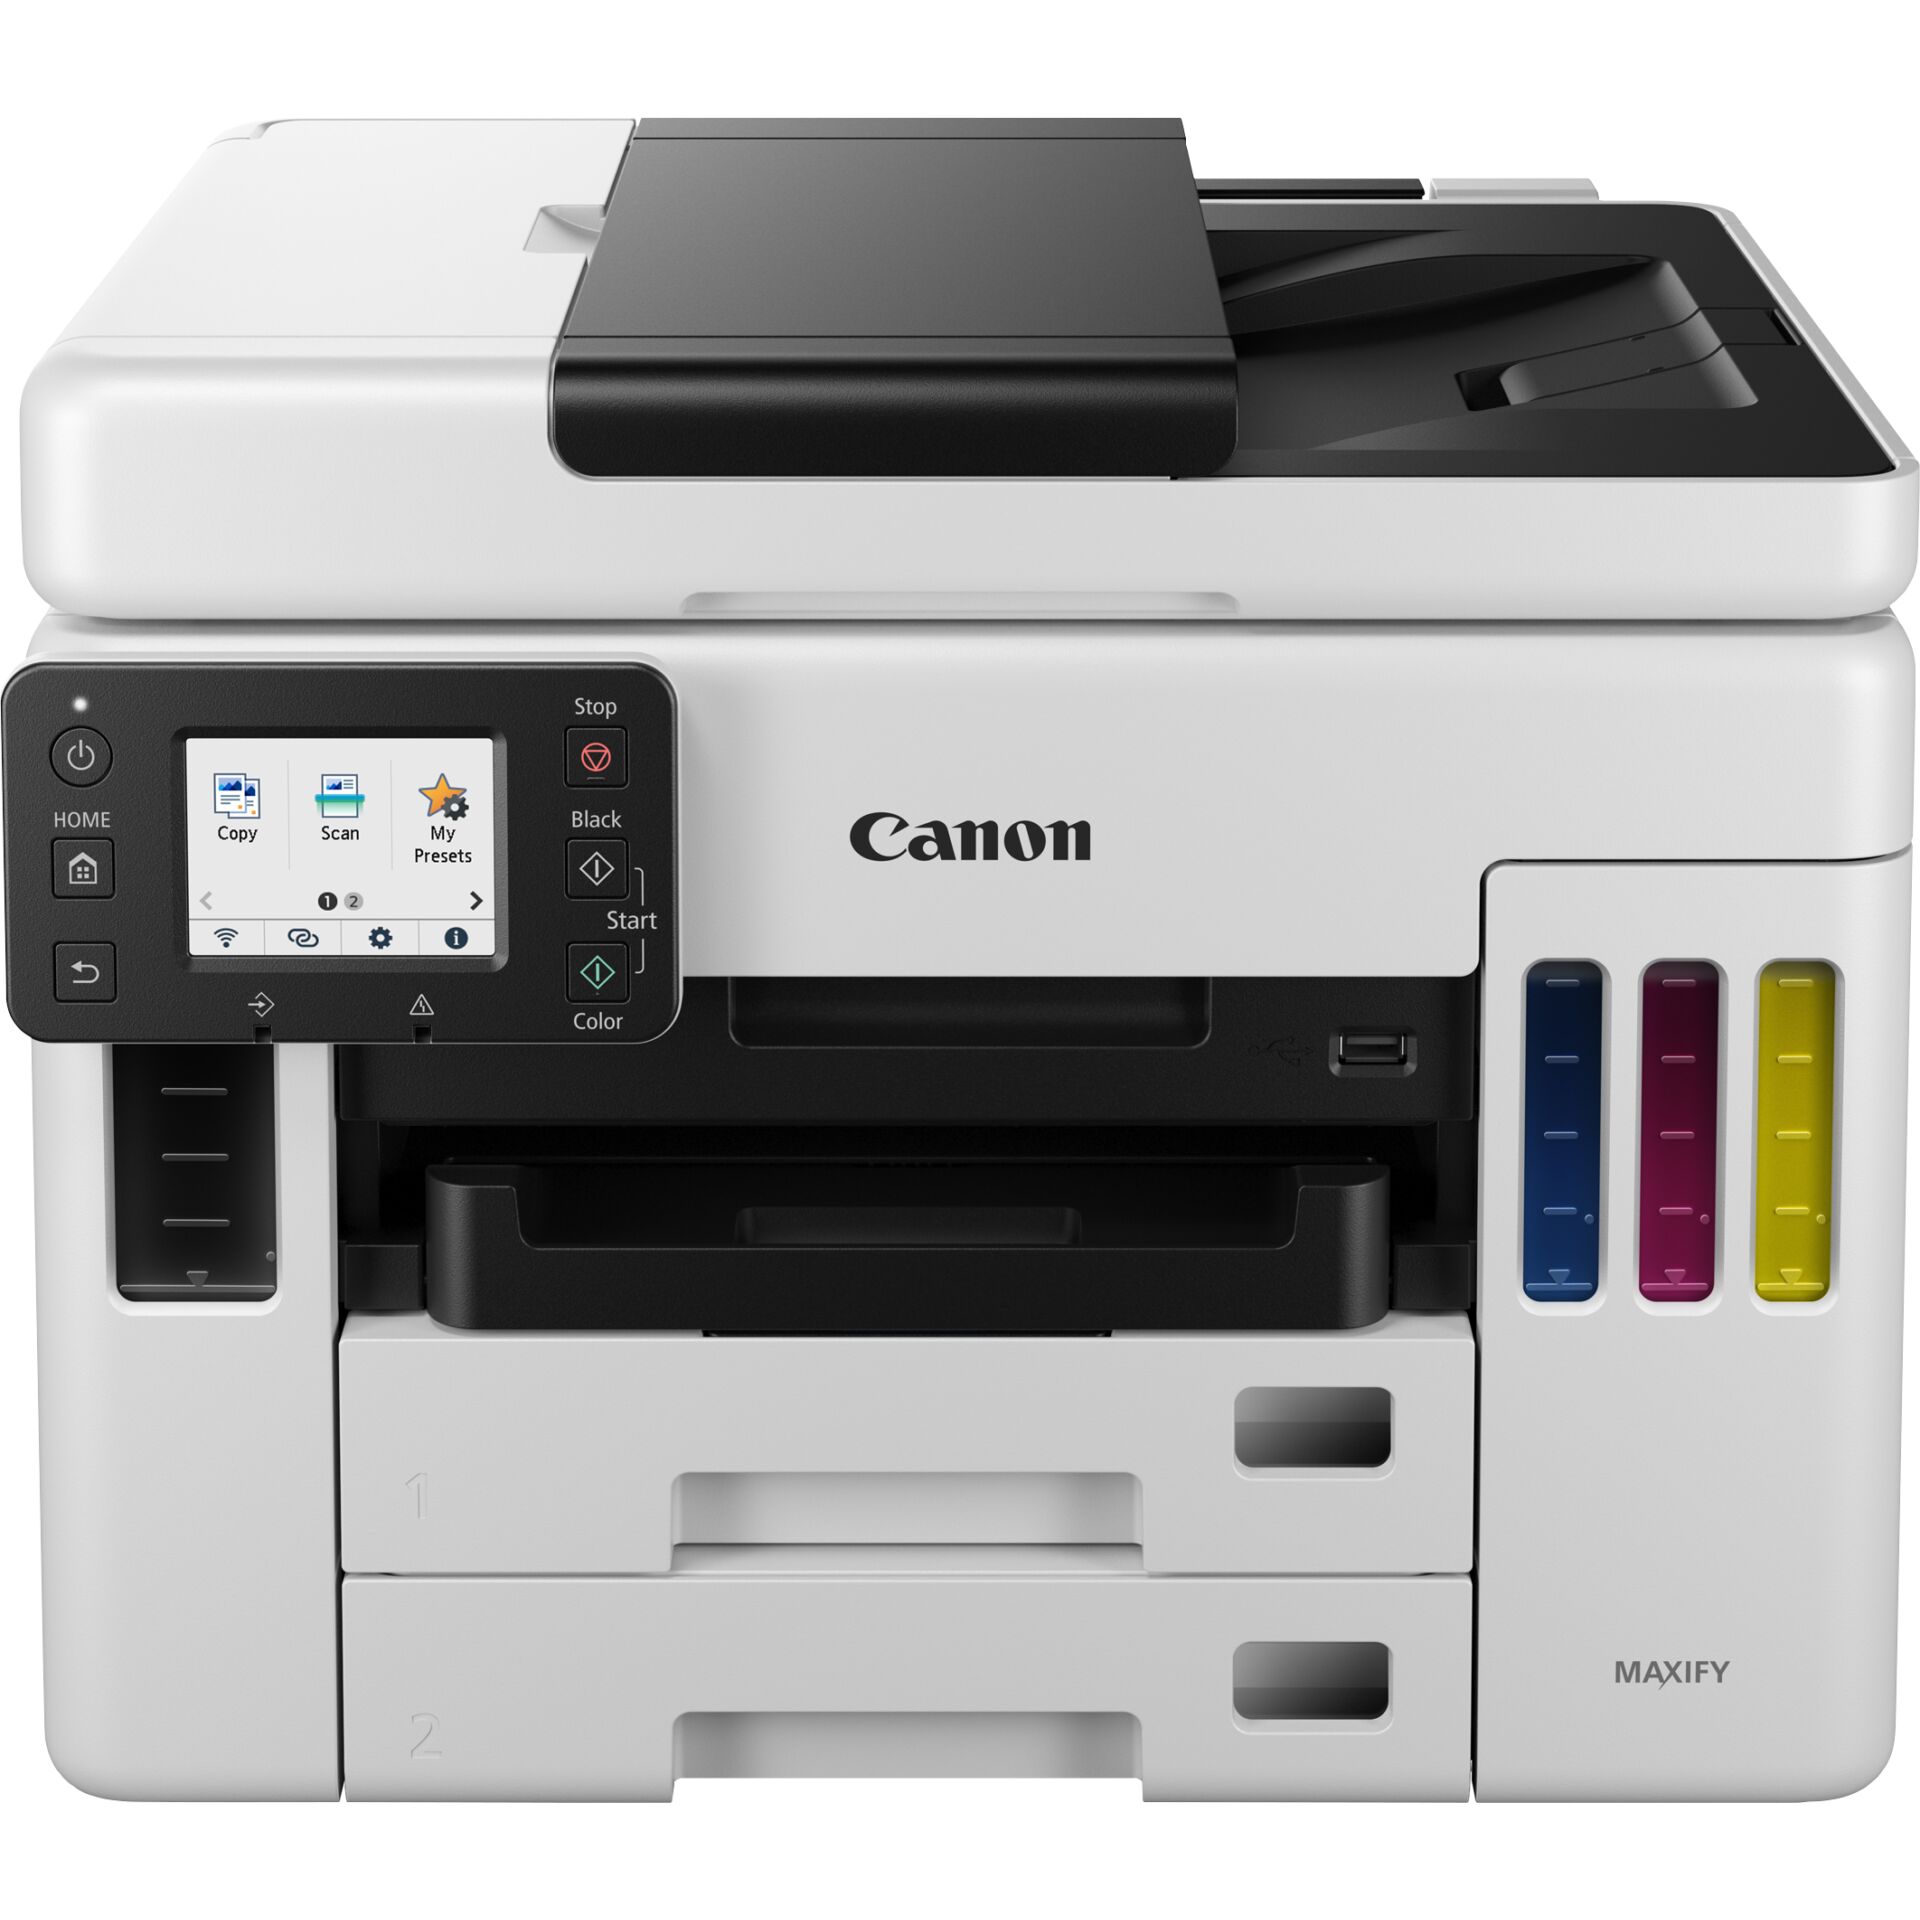 Canon MAXIFY GX7050, WLAN, Tinte, mehrfarbig-Multifunktions- gerät, Drucker/Scanner/Kopierer/Fax